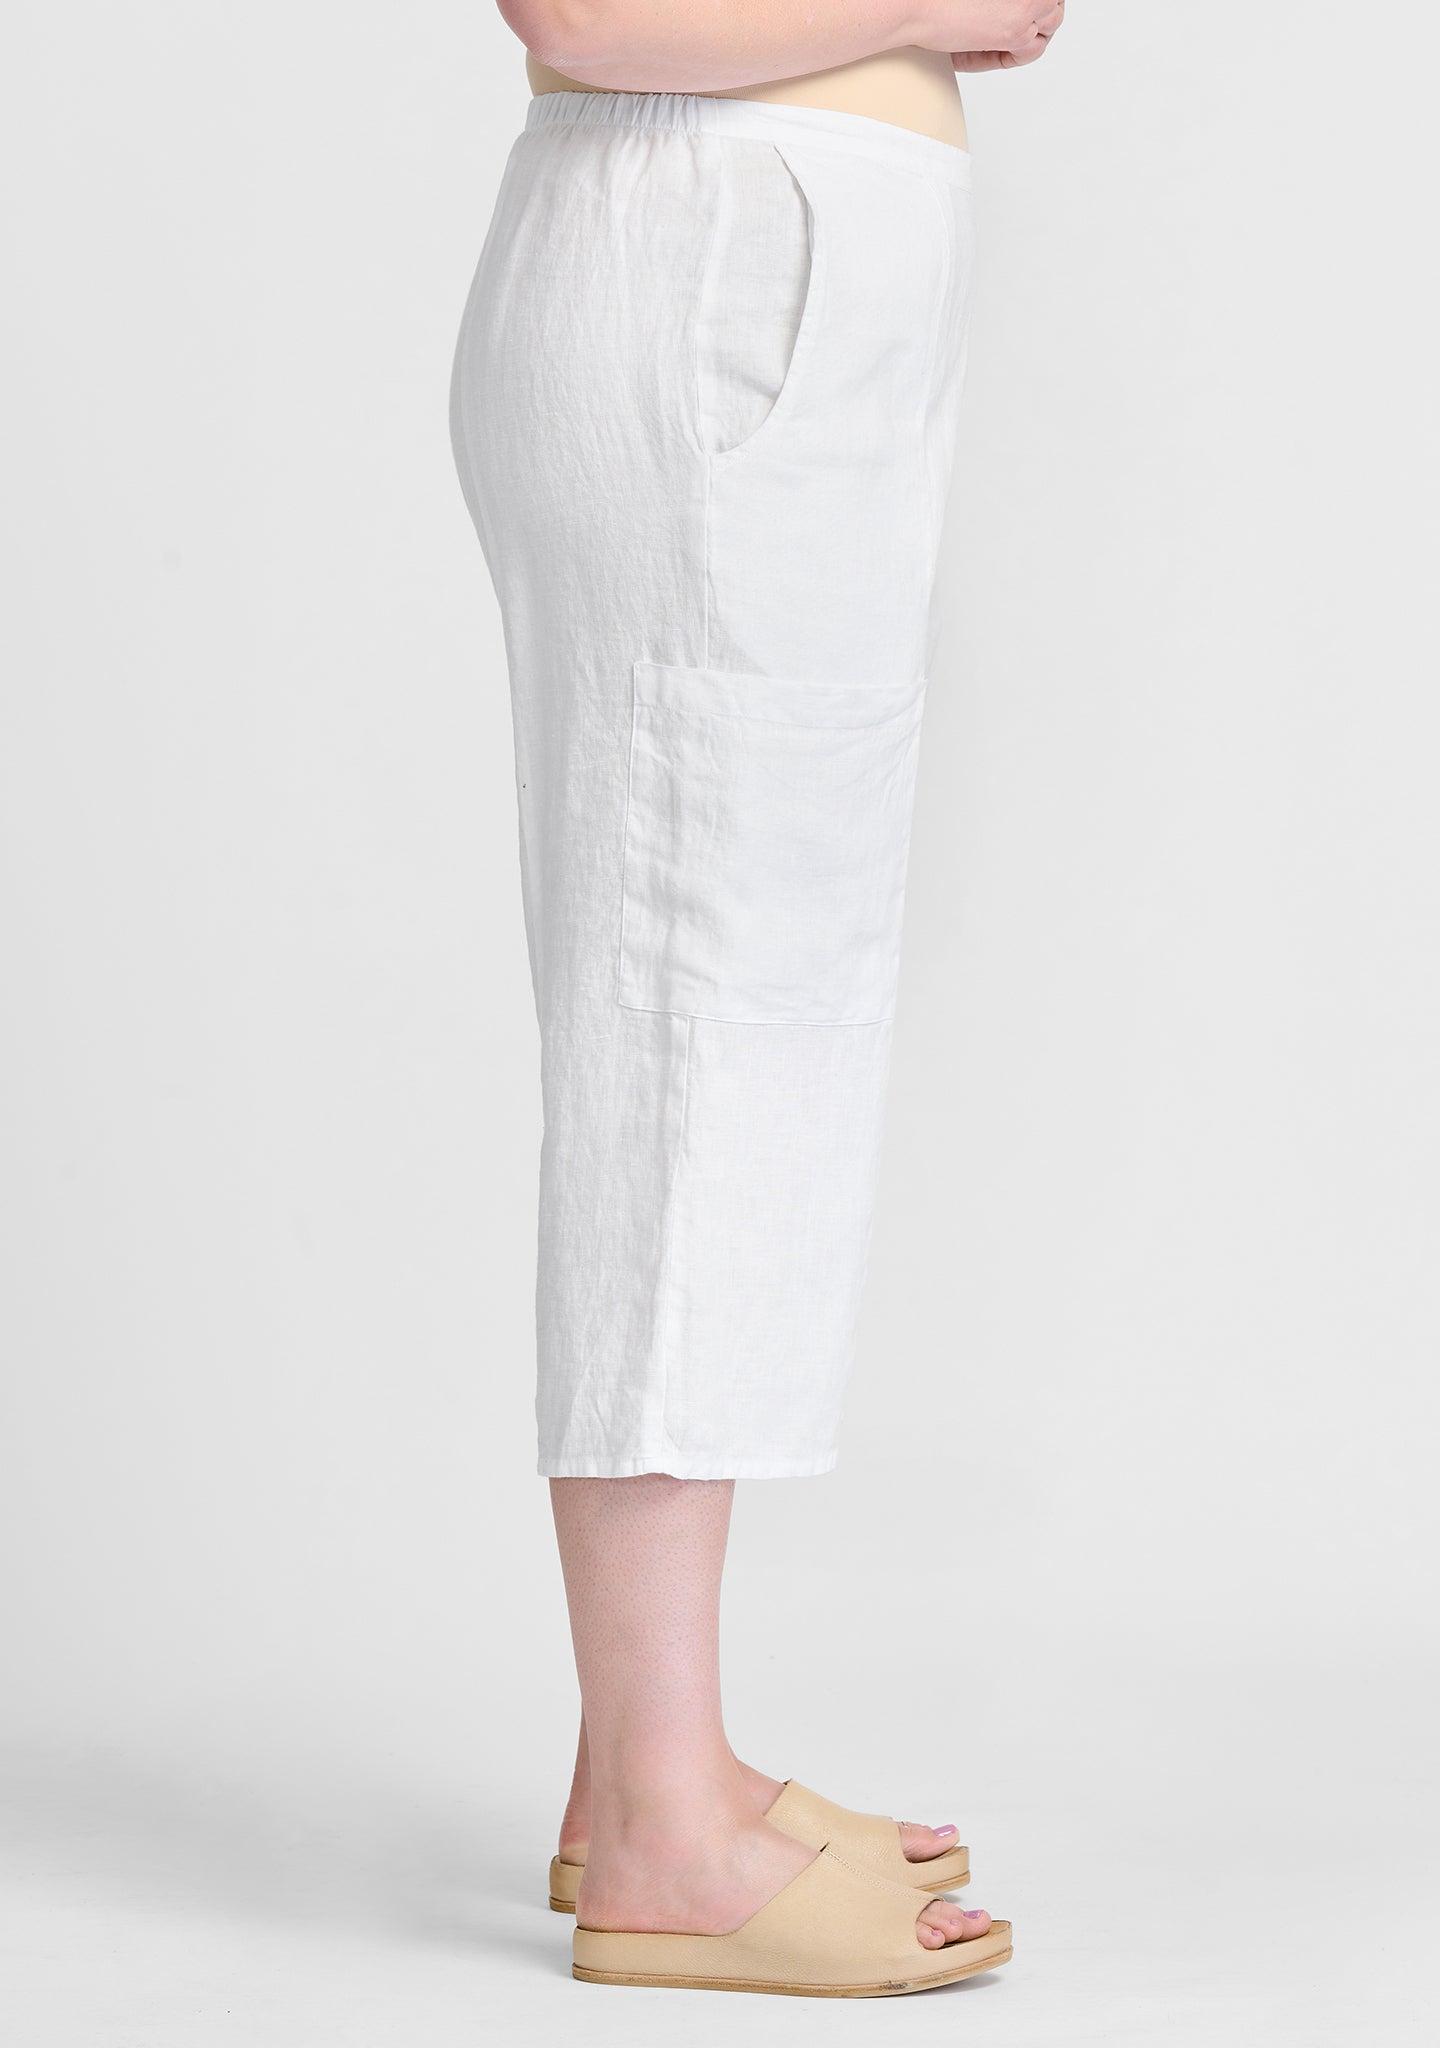 Charter Club White Floral Embroidered Capri Pant 6 | White pants women,  Striped linen pants, White crop pants